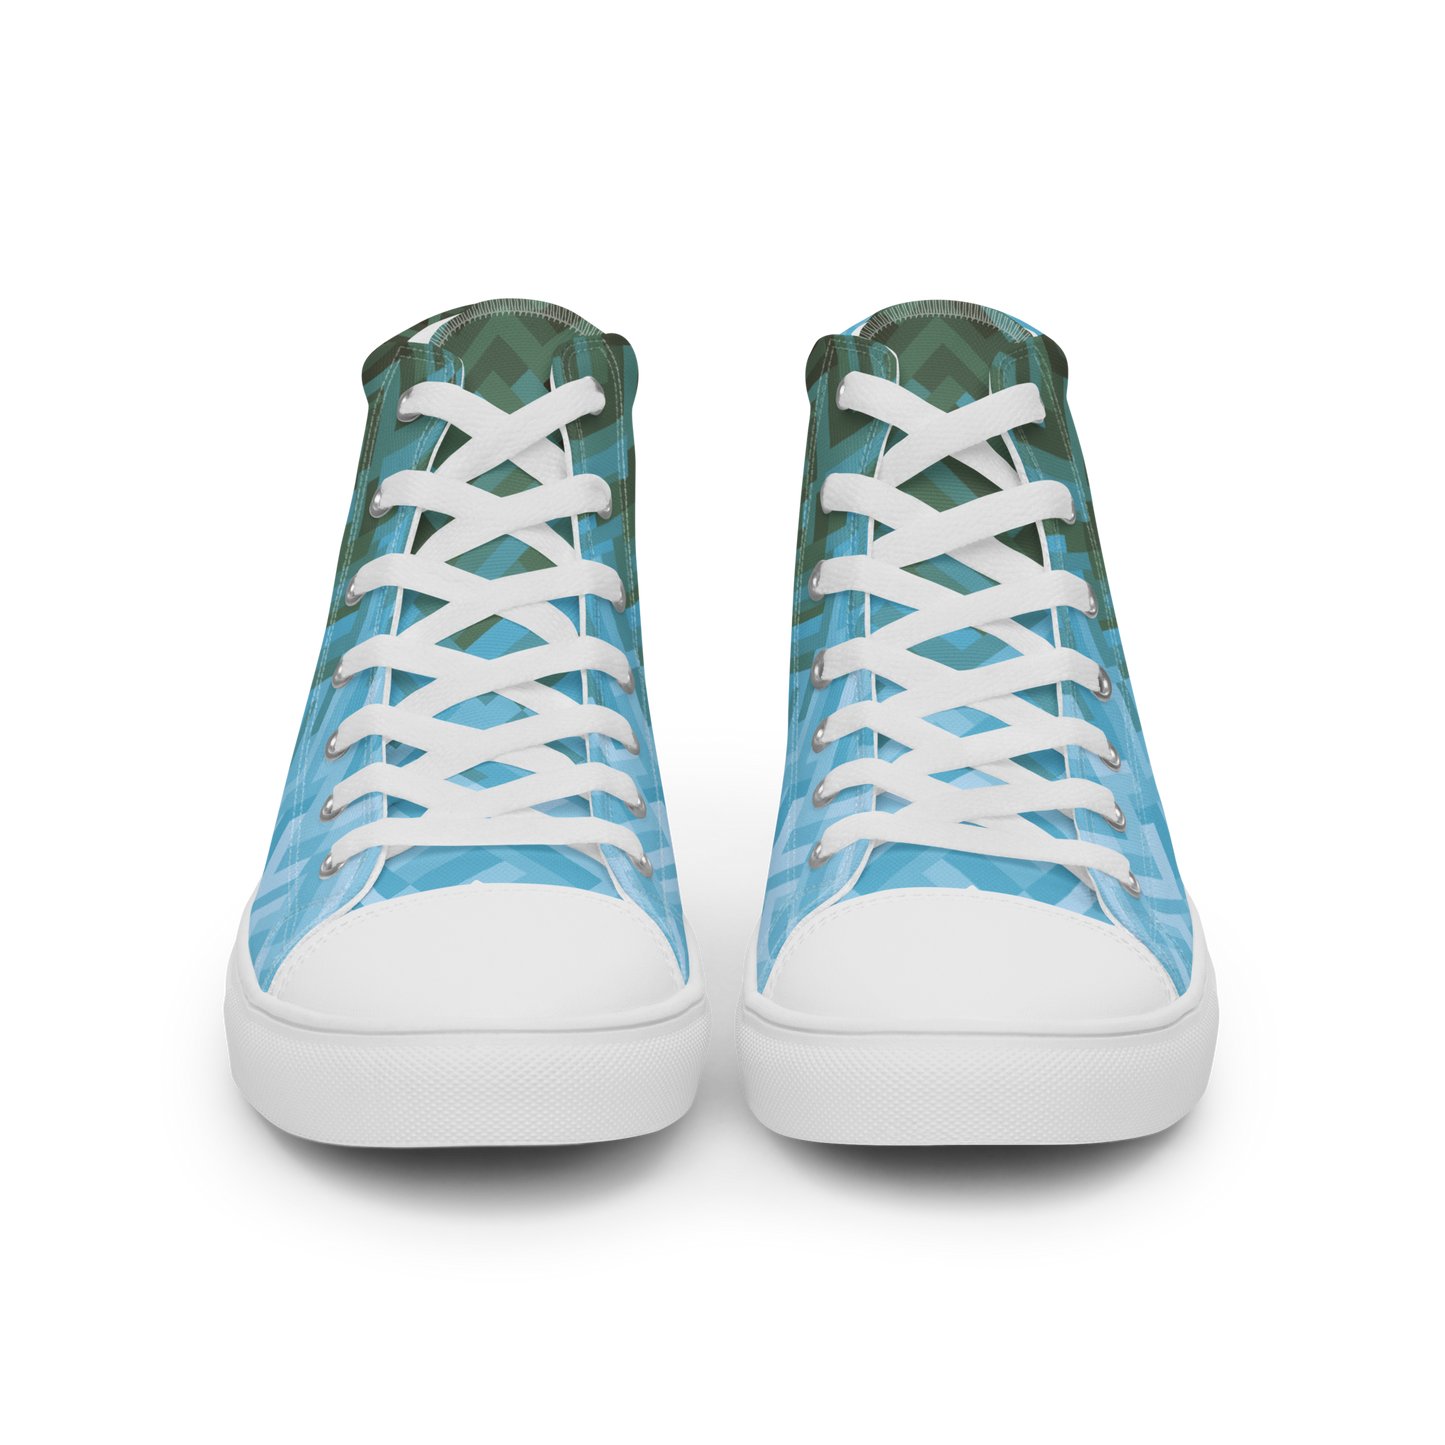 Women's Canvas Sneakers ❯ Polygonal Gradient ❯ Portage